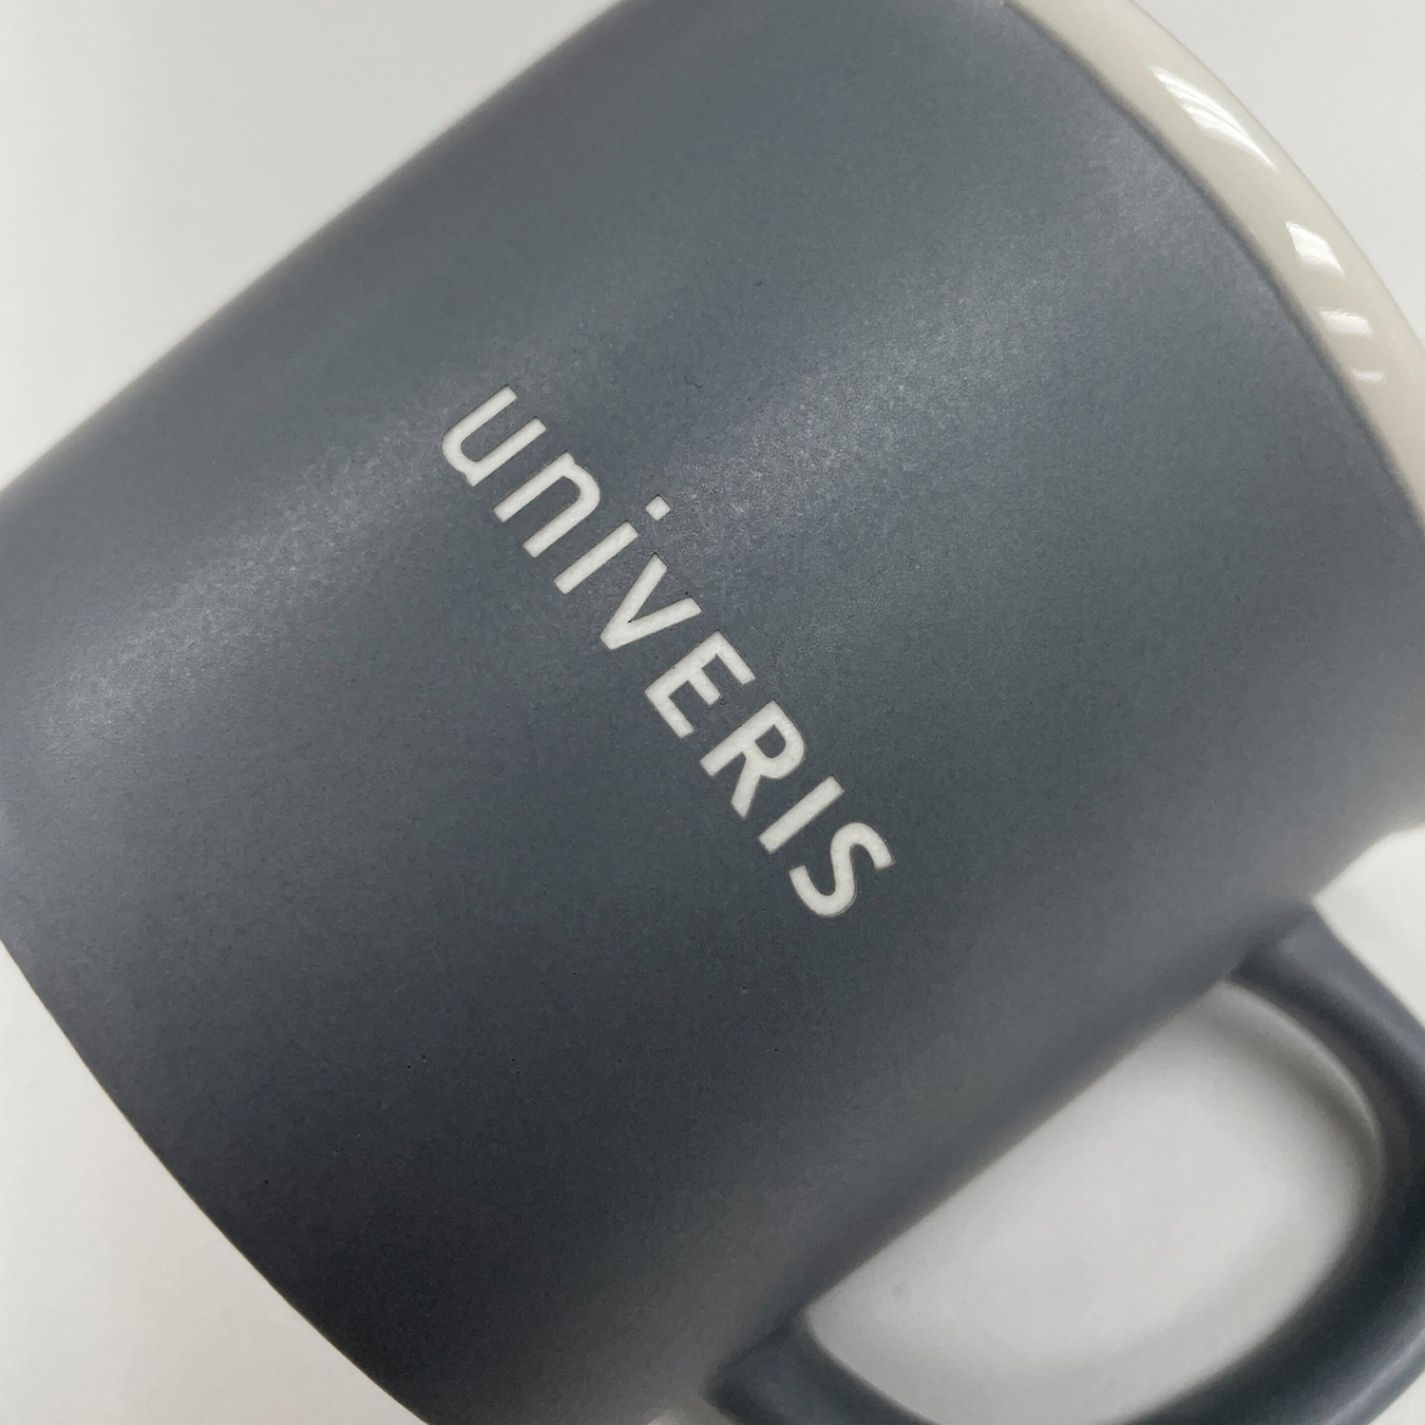 An example of a laser printed custom mug in Canada